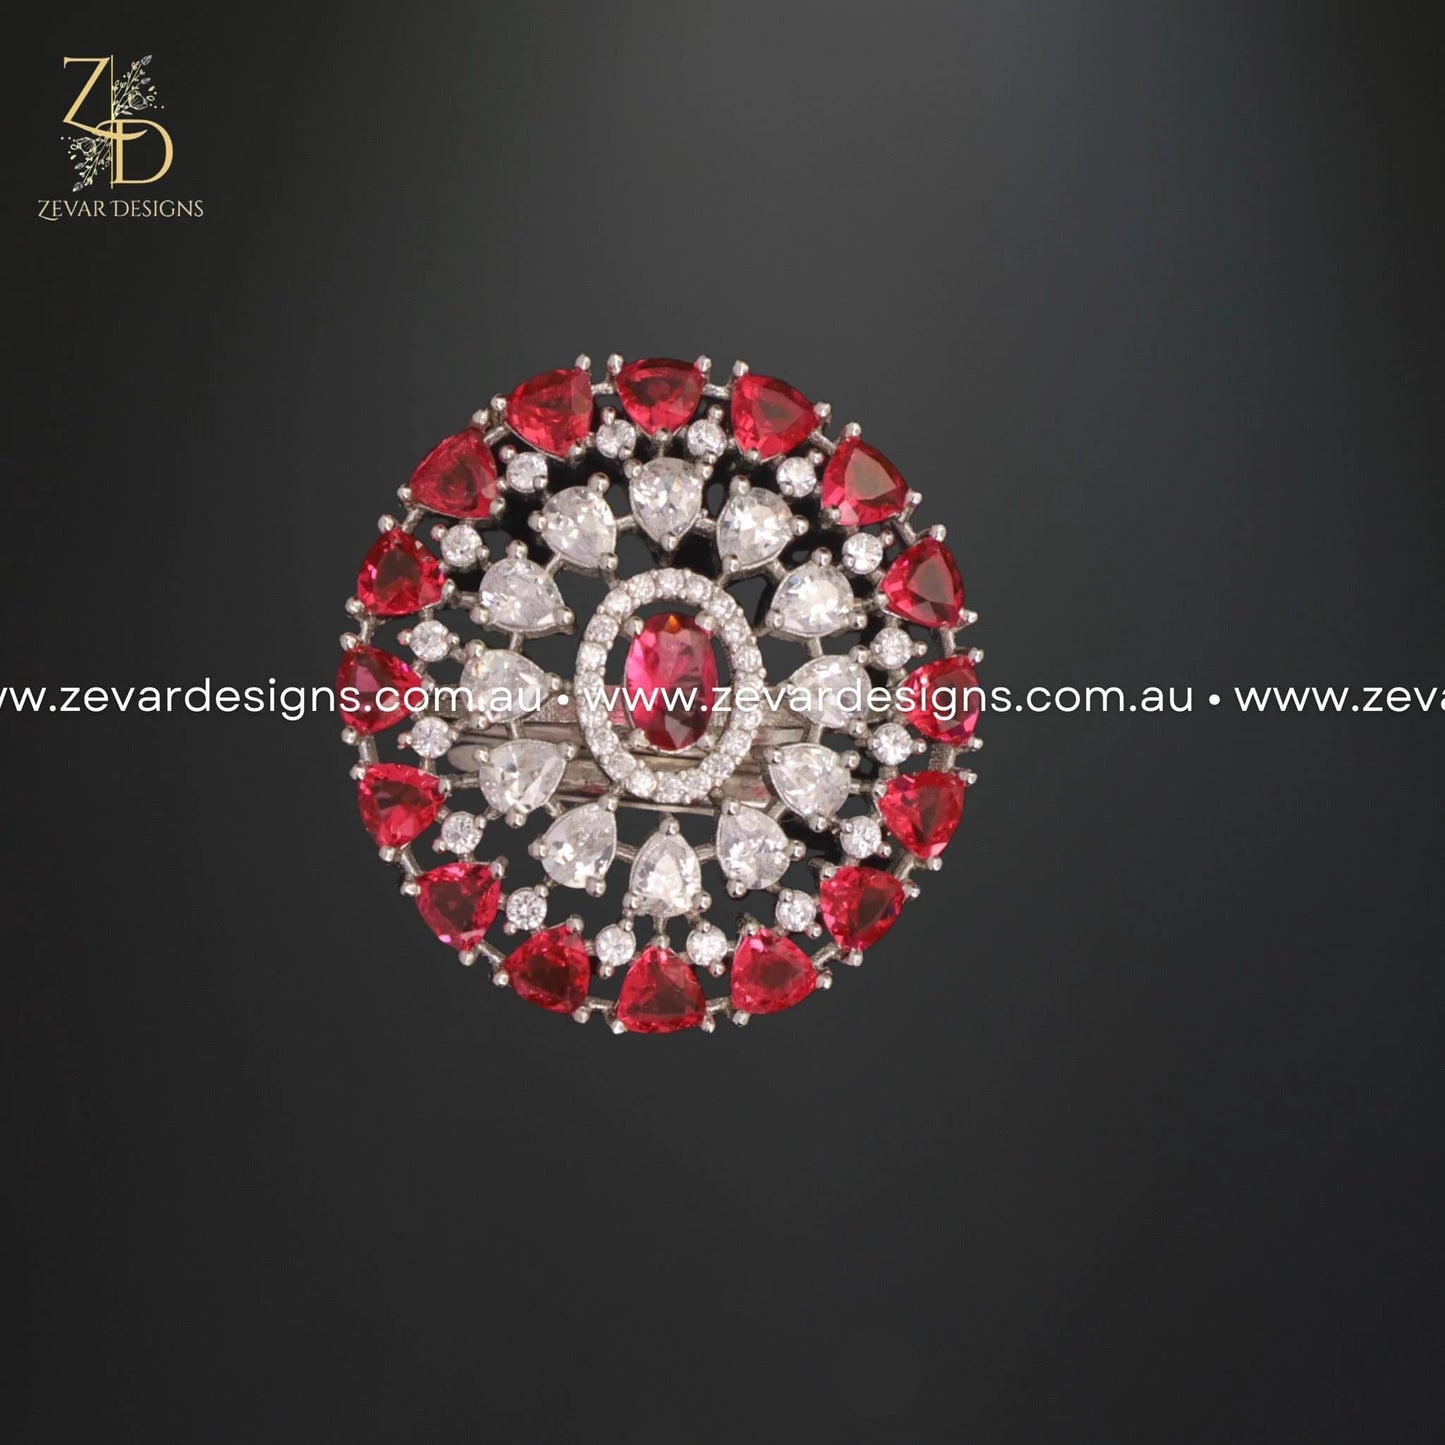 Zevar Designs Rings - AD AD/Zircon Ring - Ruby